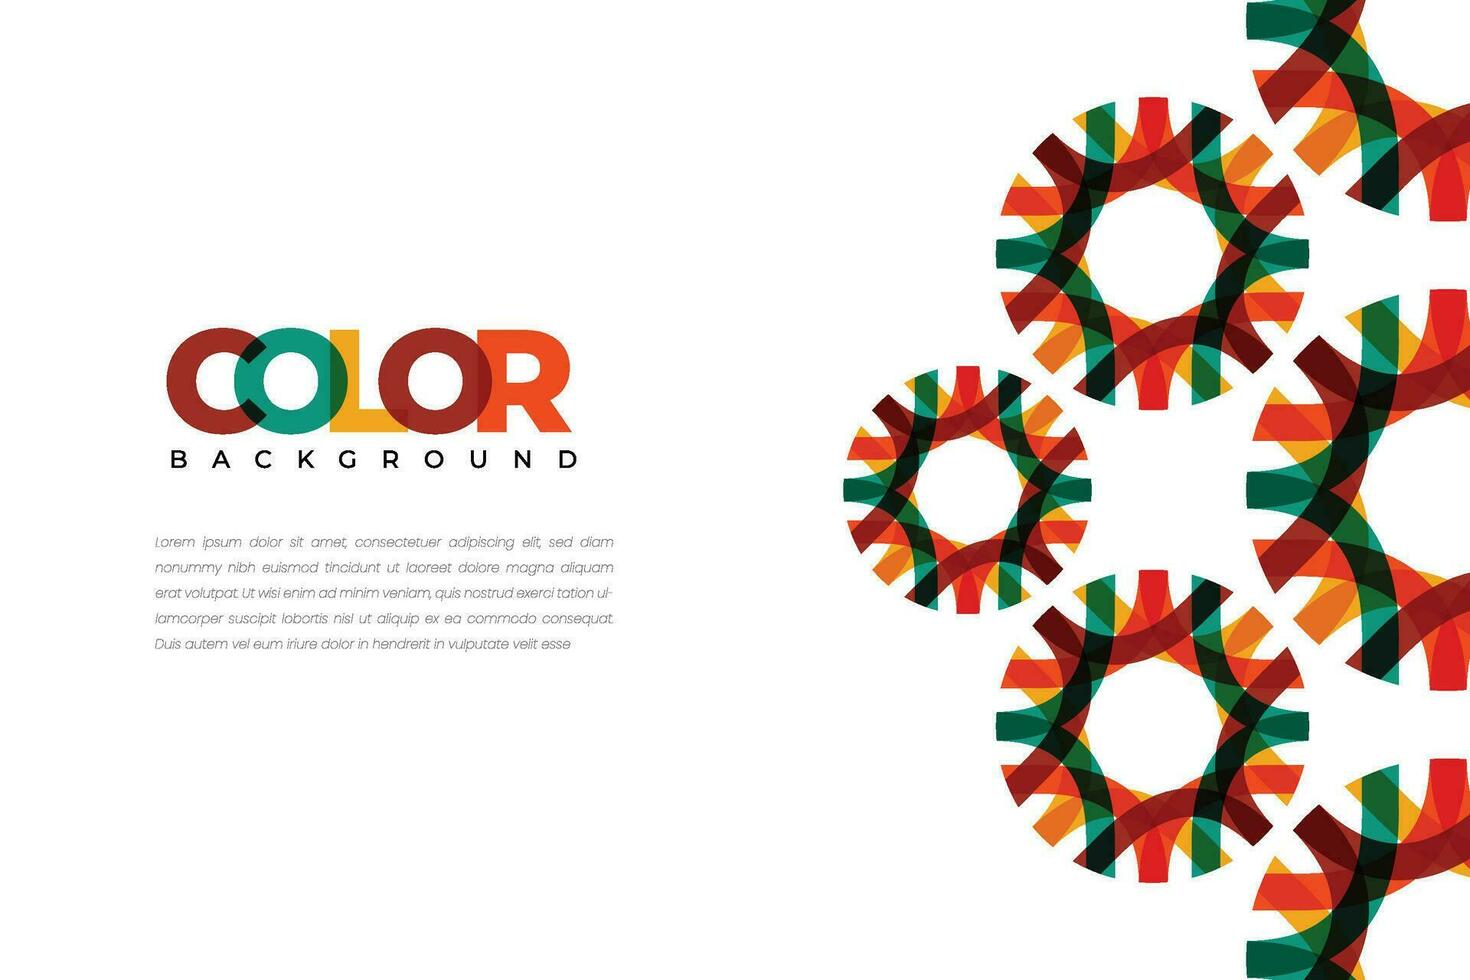 färgrik dekorativ bakgrund med kreativ ornament. enkel geometrisk mosaik- med färgrik dekorativ cirkel former. vektor